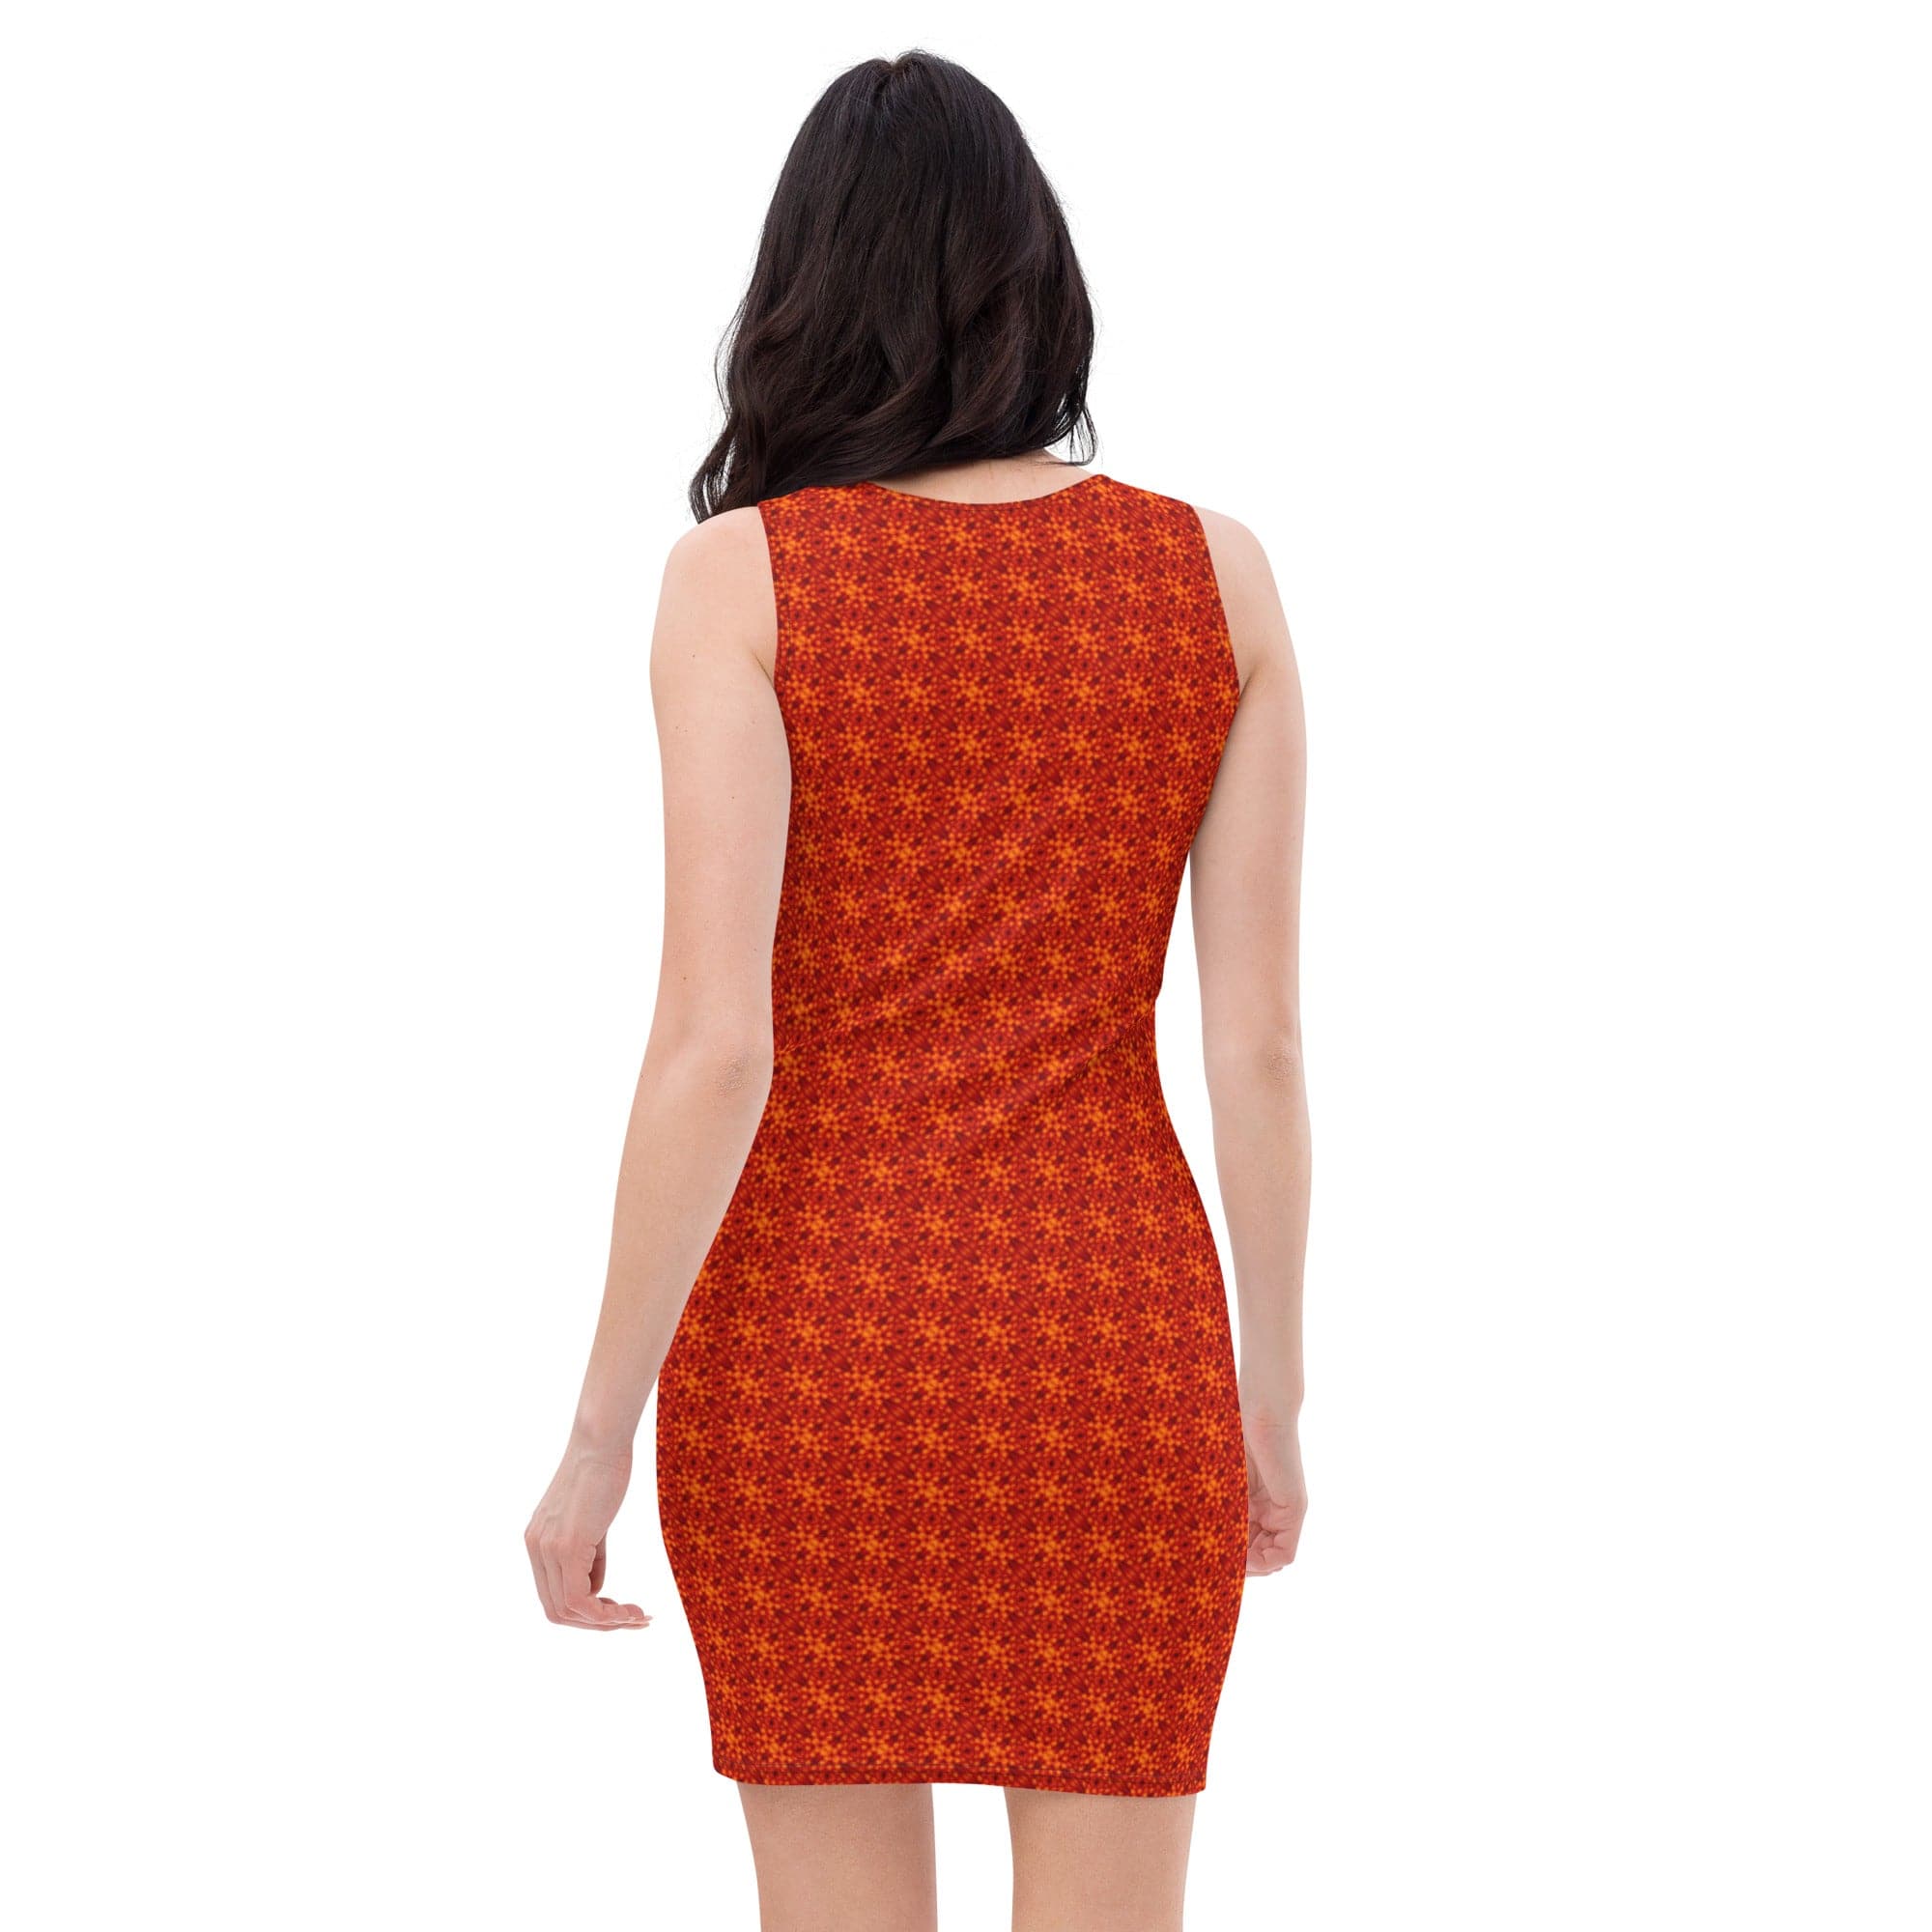 Passionate Orange figure hugging Sublimation Cut & Sew Dress, by Sensus Studio Design